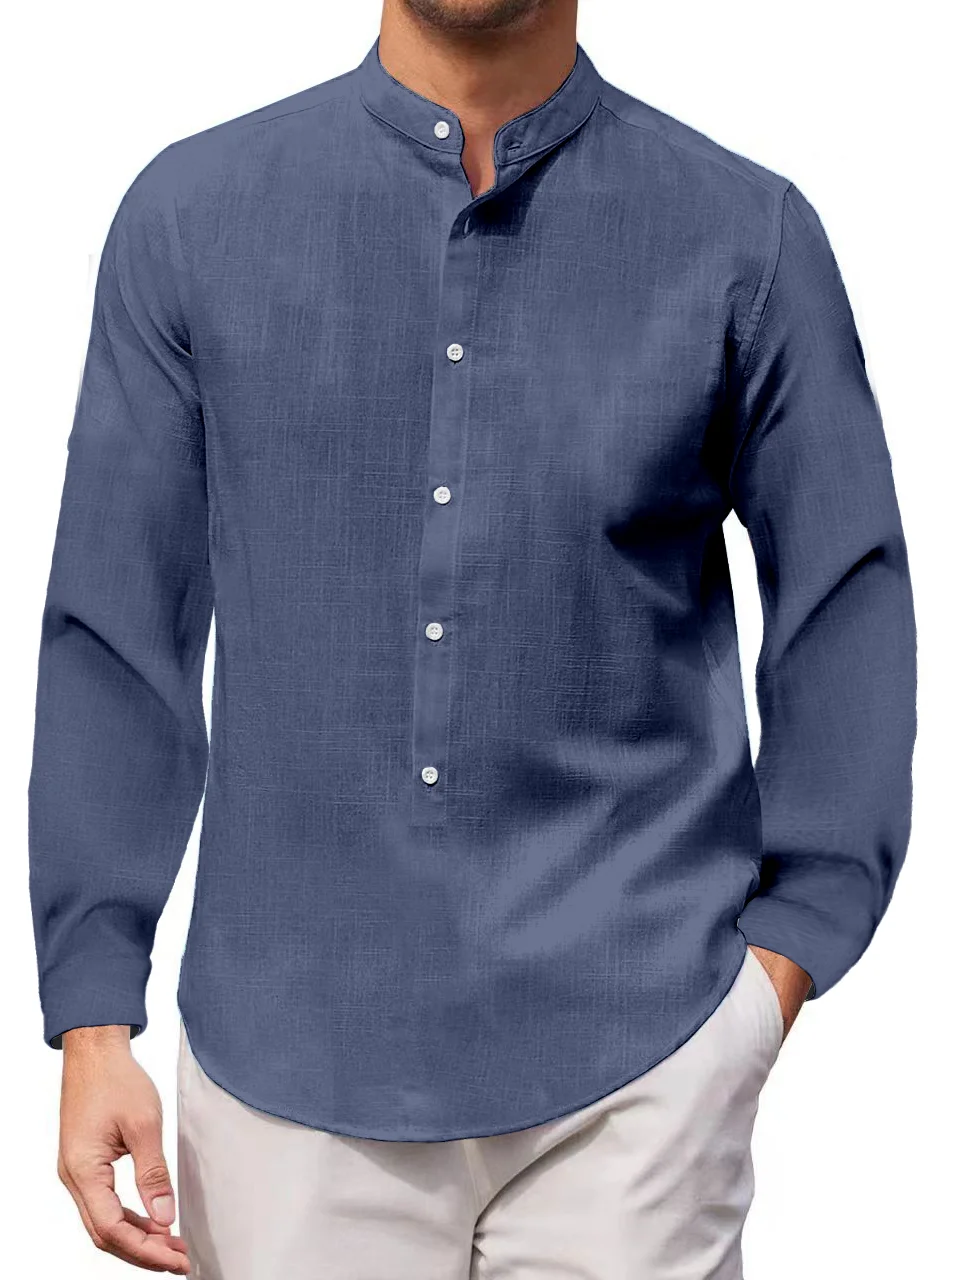 Men's Cotton Linen Casual Vacation Long Sleeve Shirt